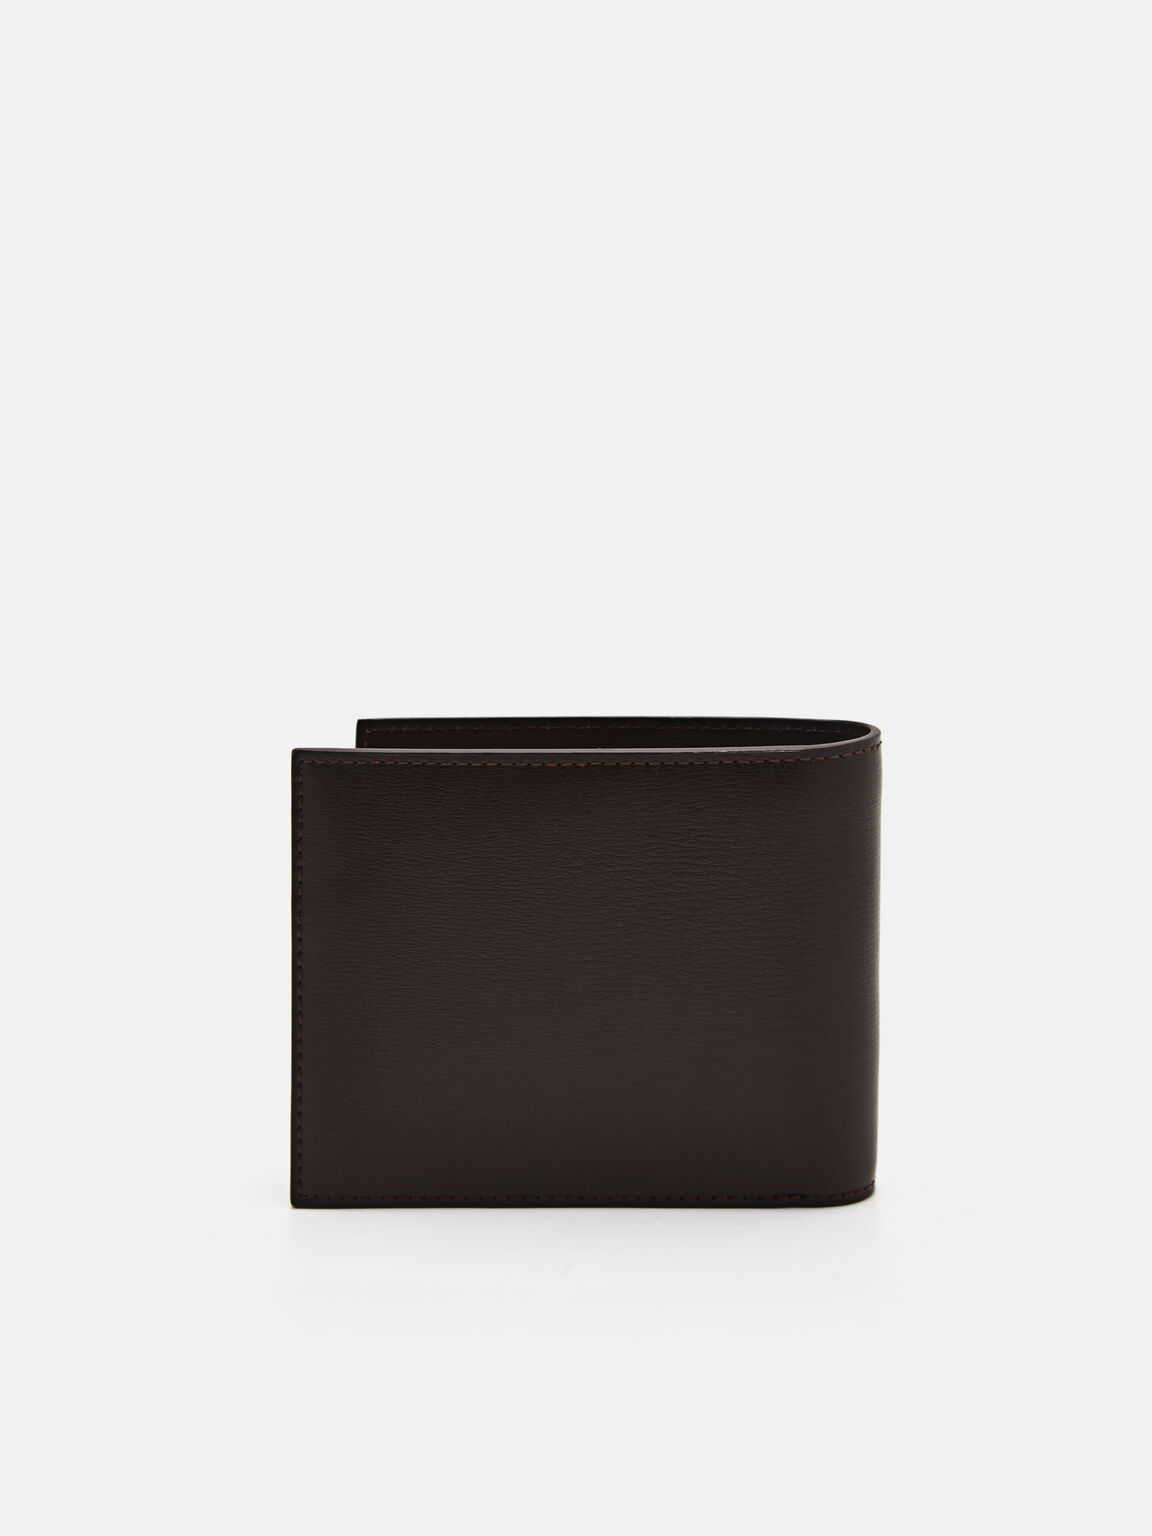 Leather Bi-Fold Wallet with Insert, Dark Brown, hi-res